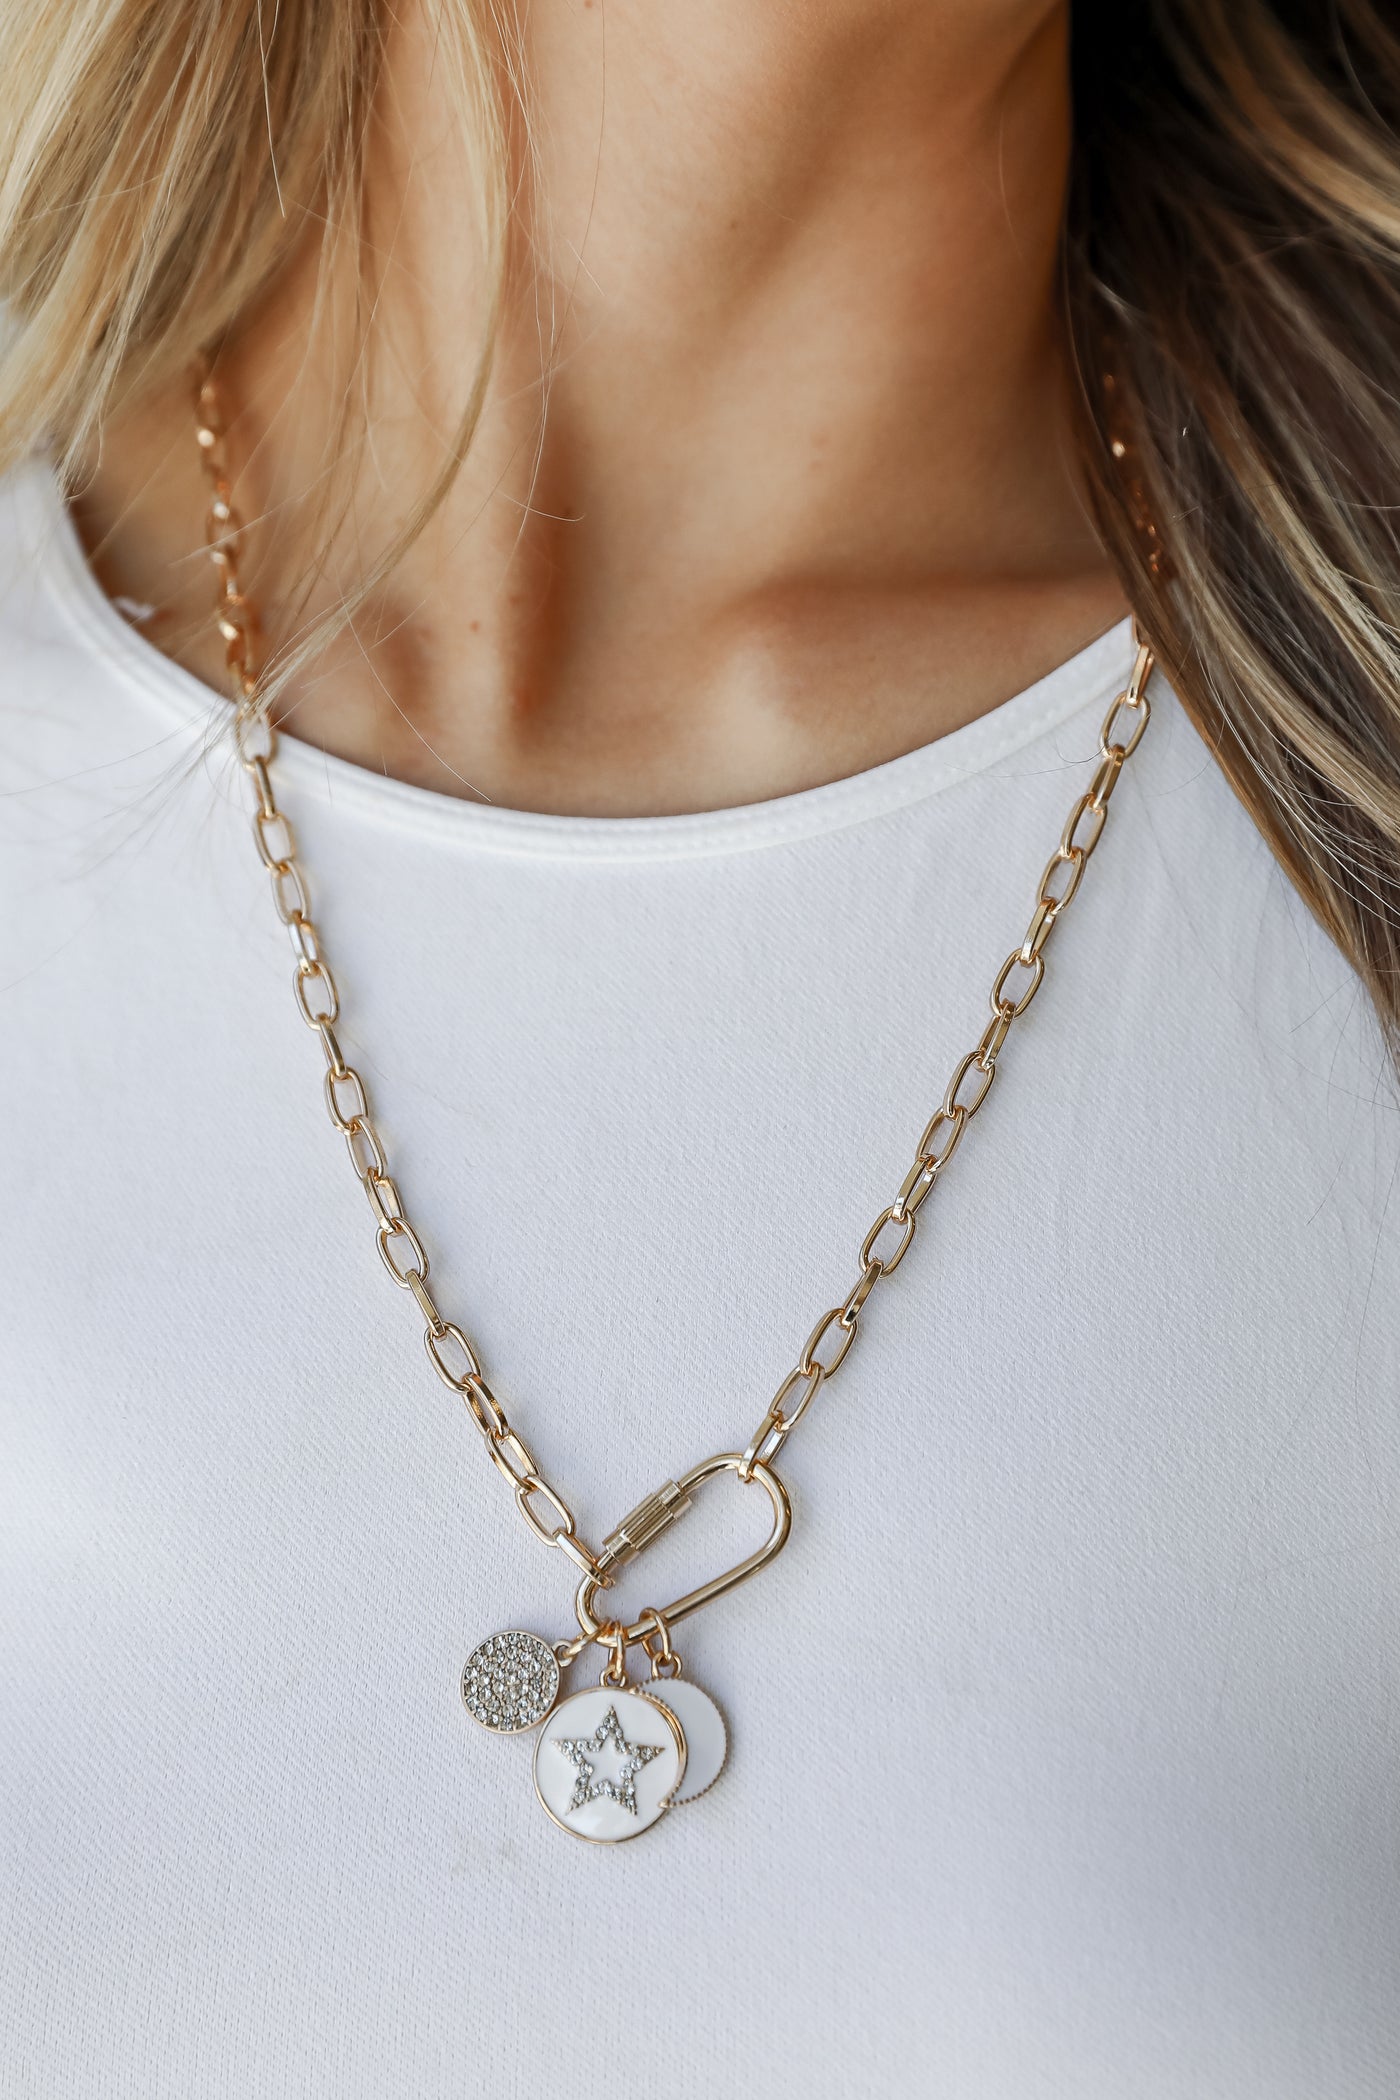 Star + Moon Rhinestone Gold Charm Necklace